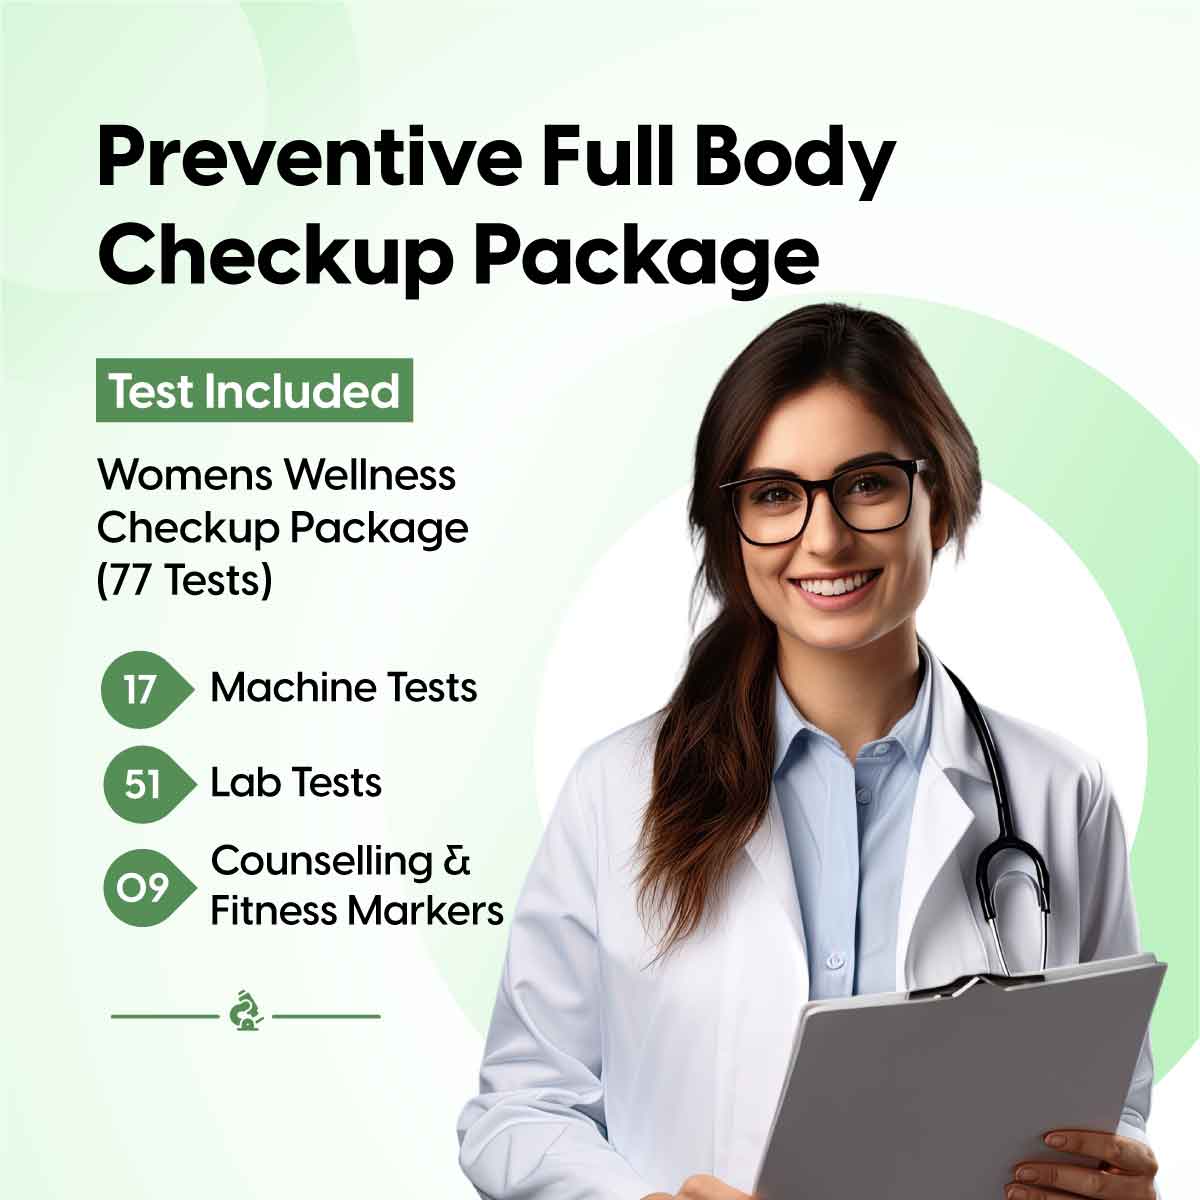 Preventive Full Body Checkup Package